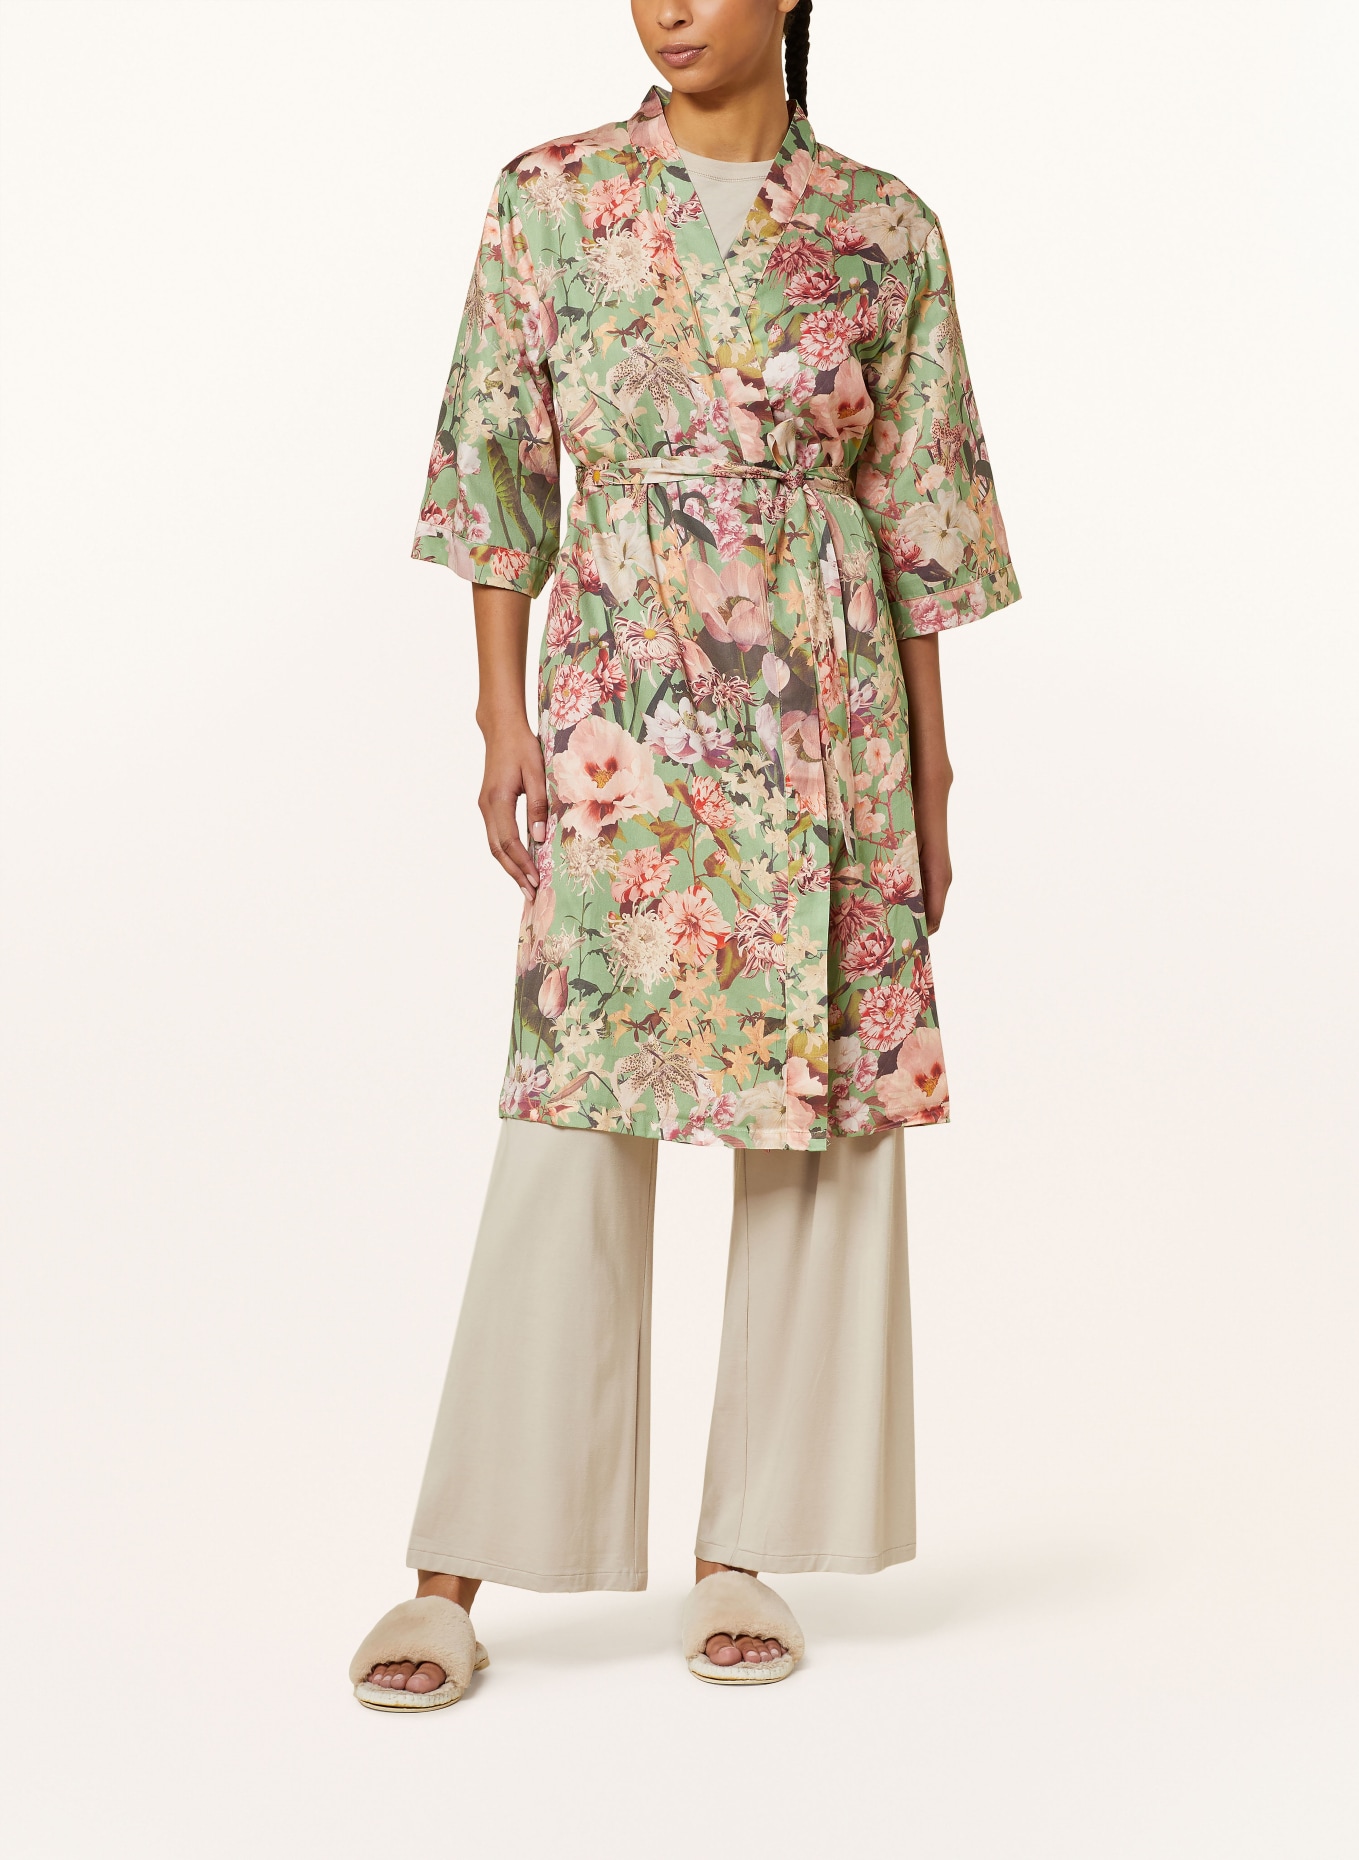 ESSENZA Damen-Kimono SARAI NOLESTE, Farbe: HELLGRÜN/ LACHS/ GRÜN (Bild 2)